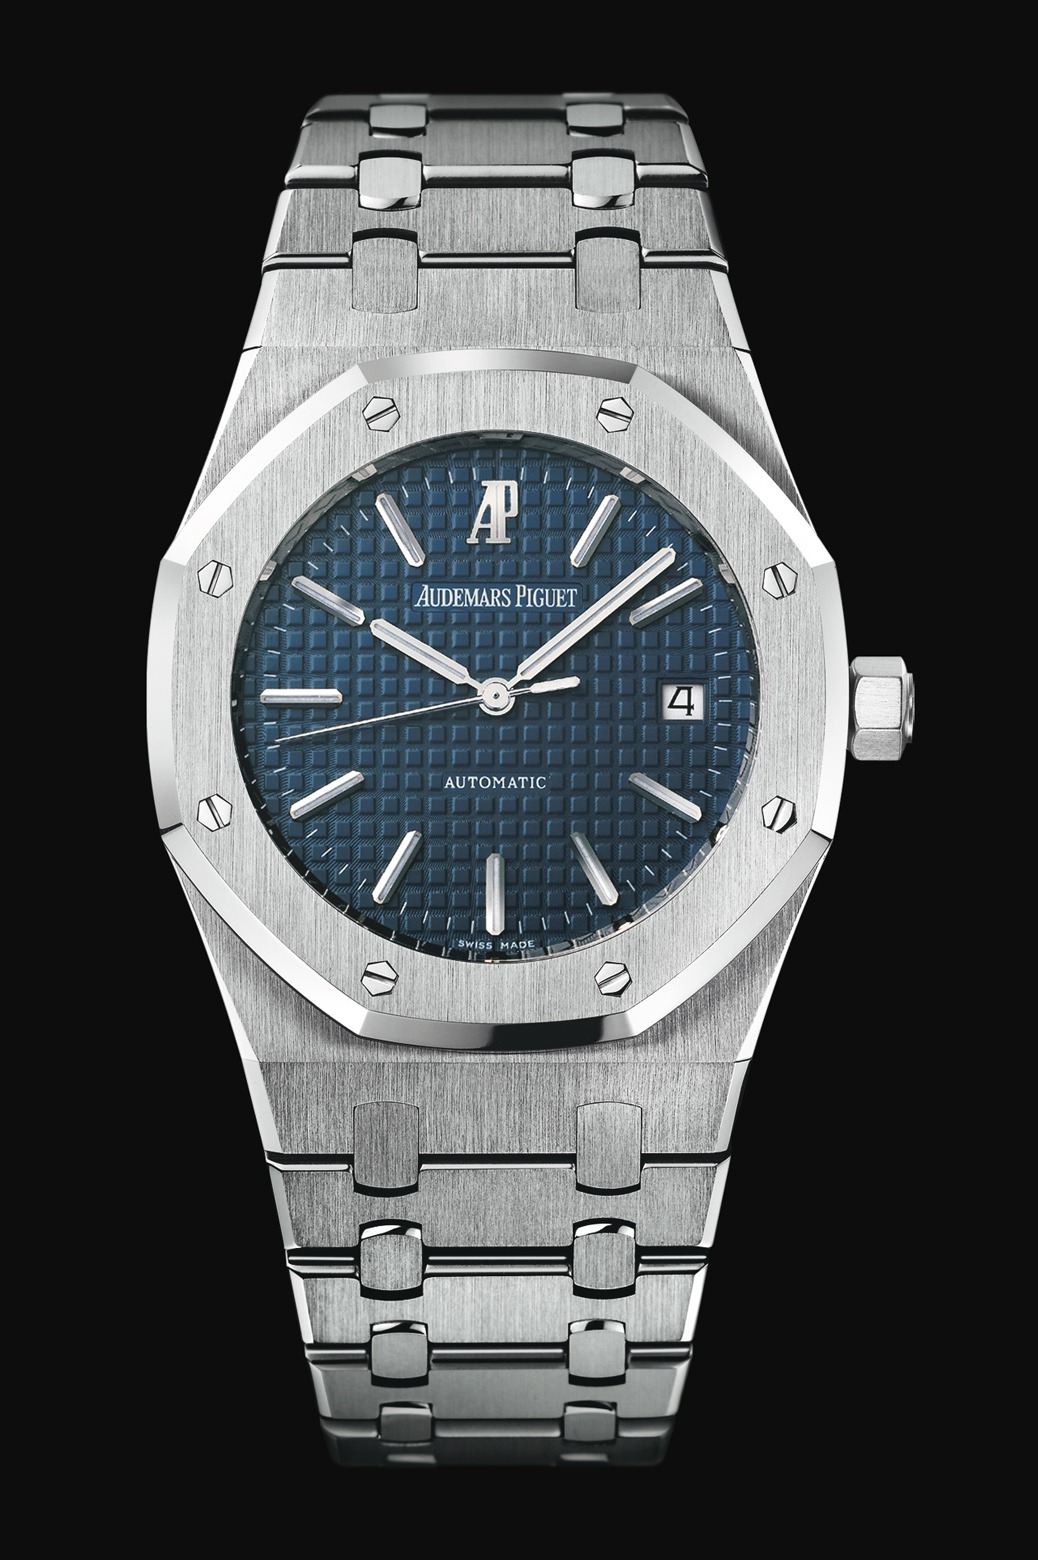 Audemars Piguet Royal Oak Automatic Steel watch REF: 15300ST.OO.1220ST.02